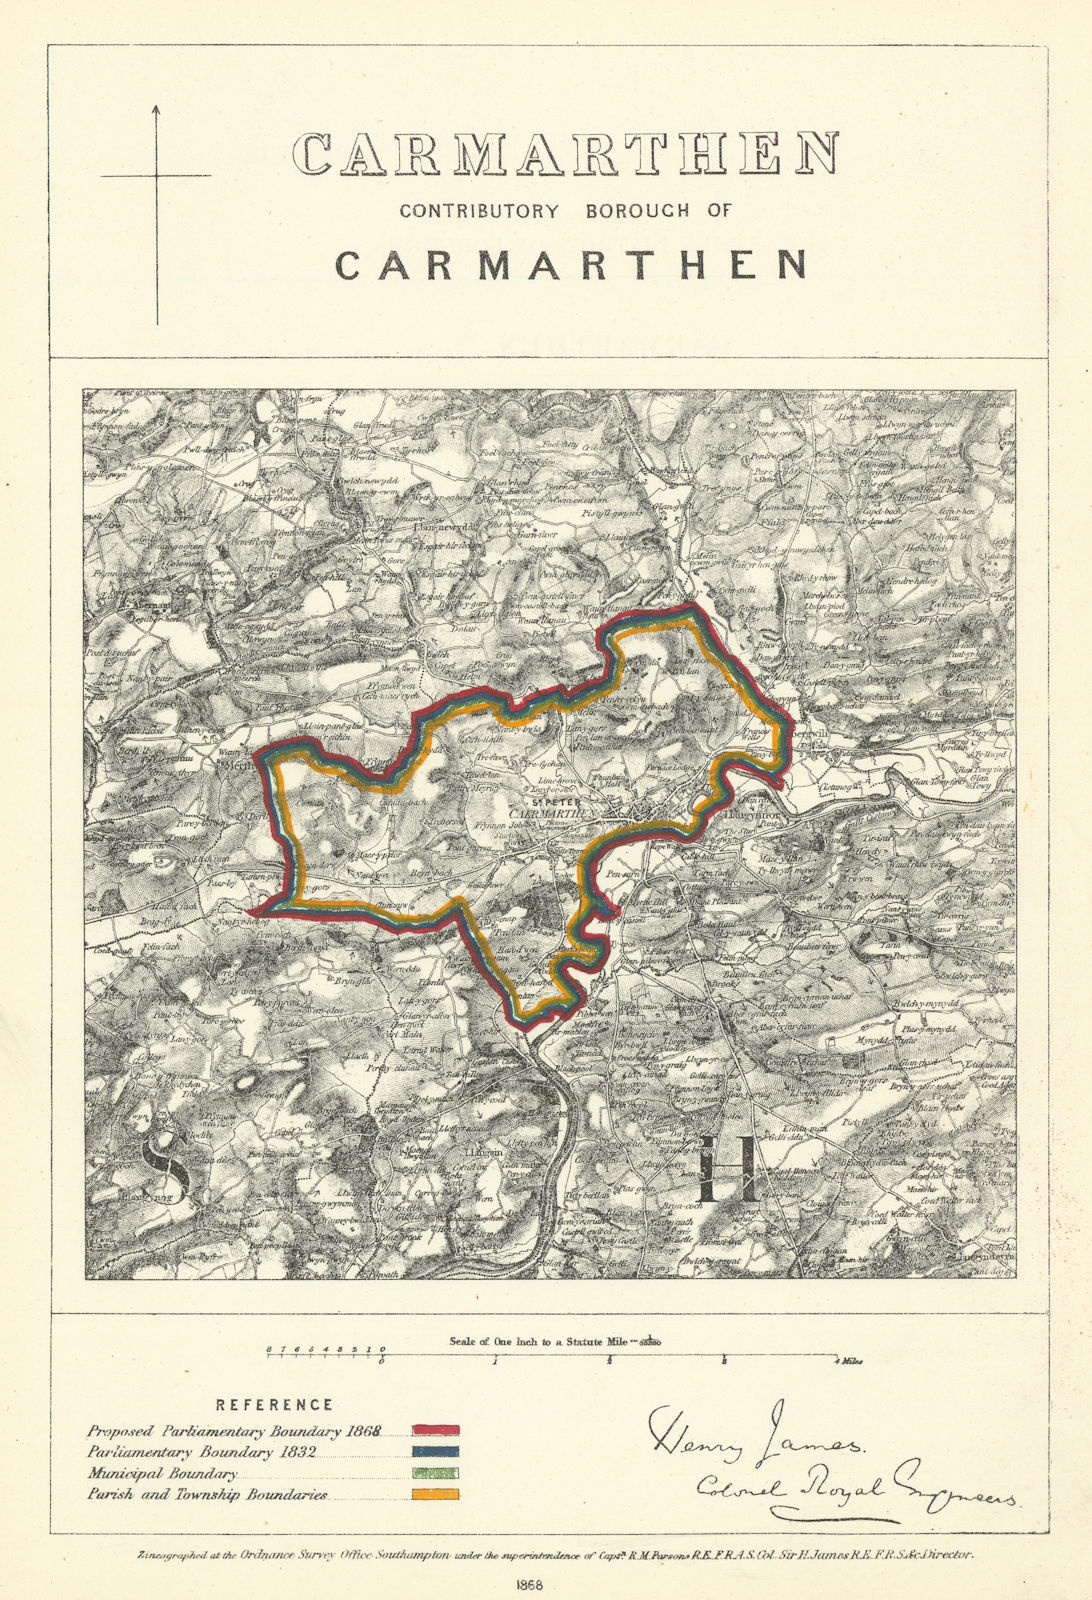 Associate Product Carmarthen Contrib'y Borough of Carmarthen. JAMES. Boundary Commission 1868 map